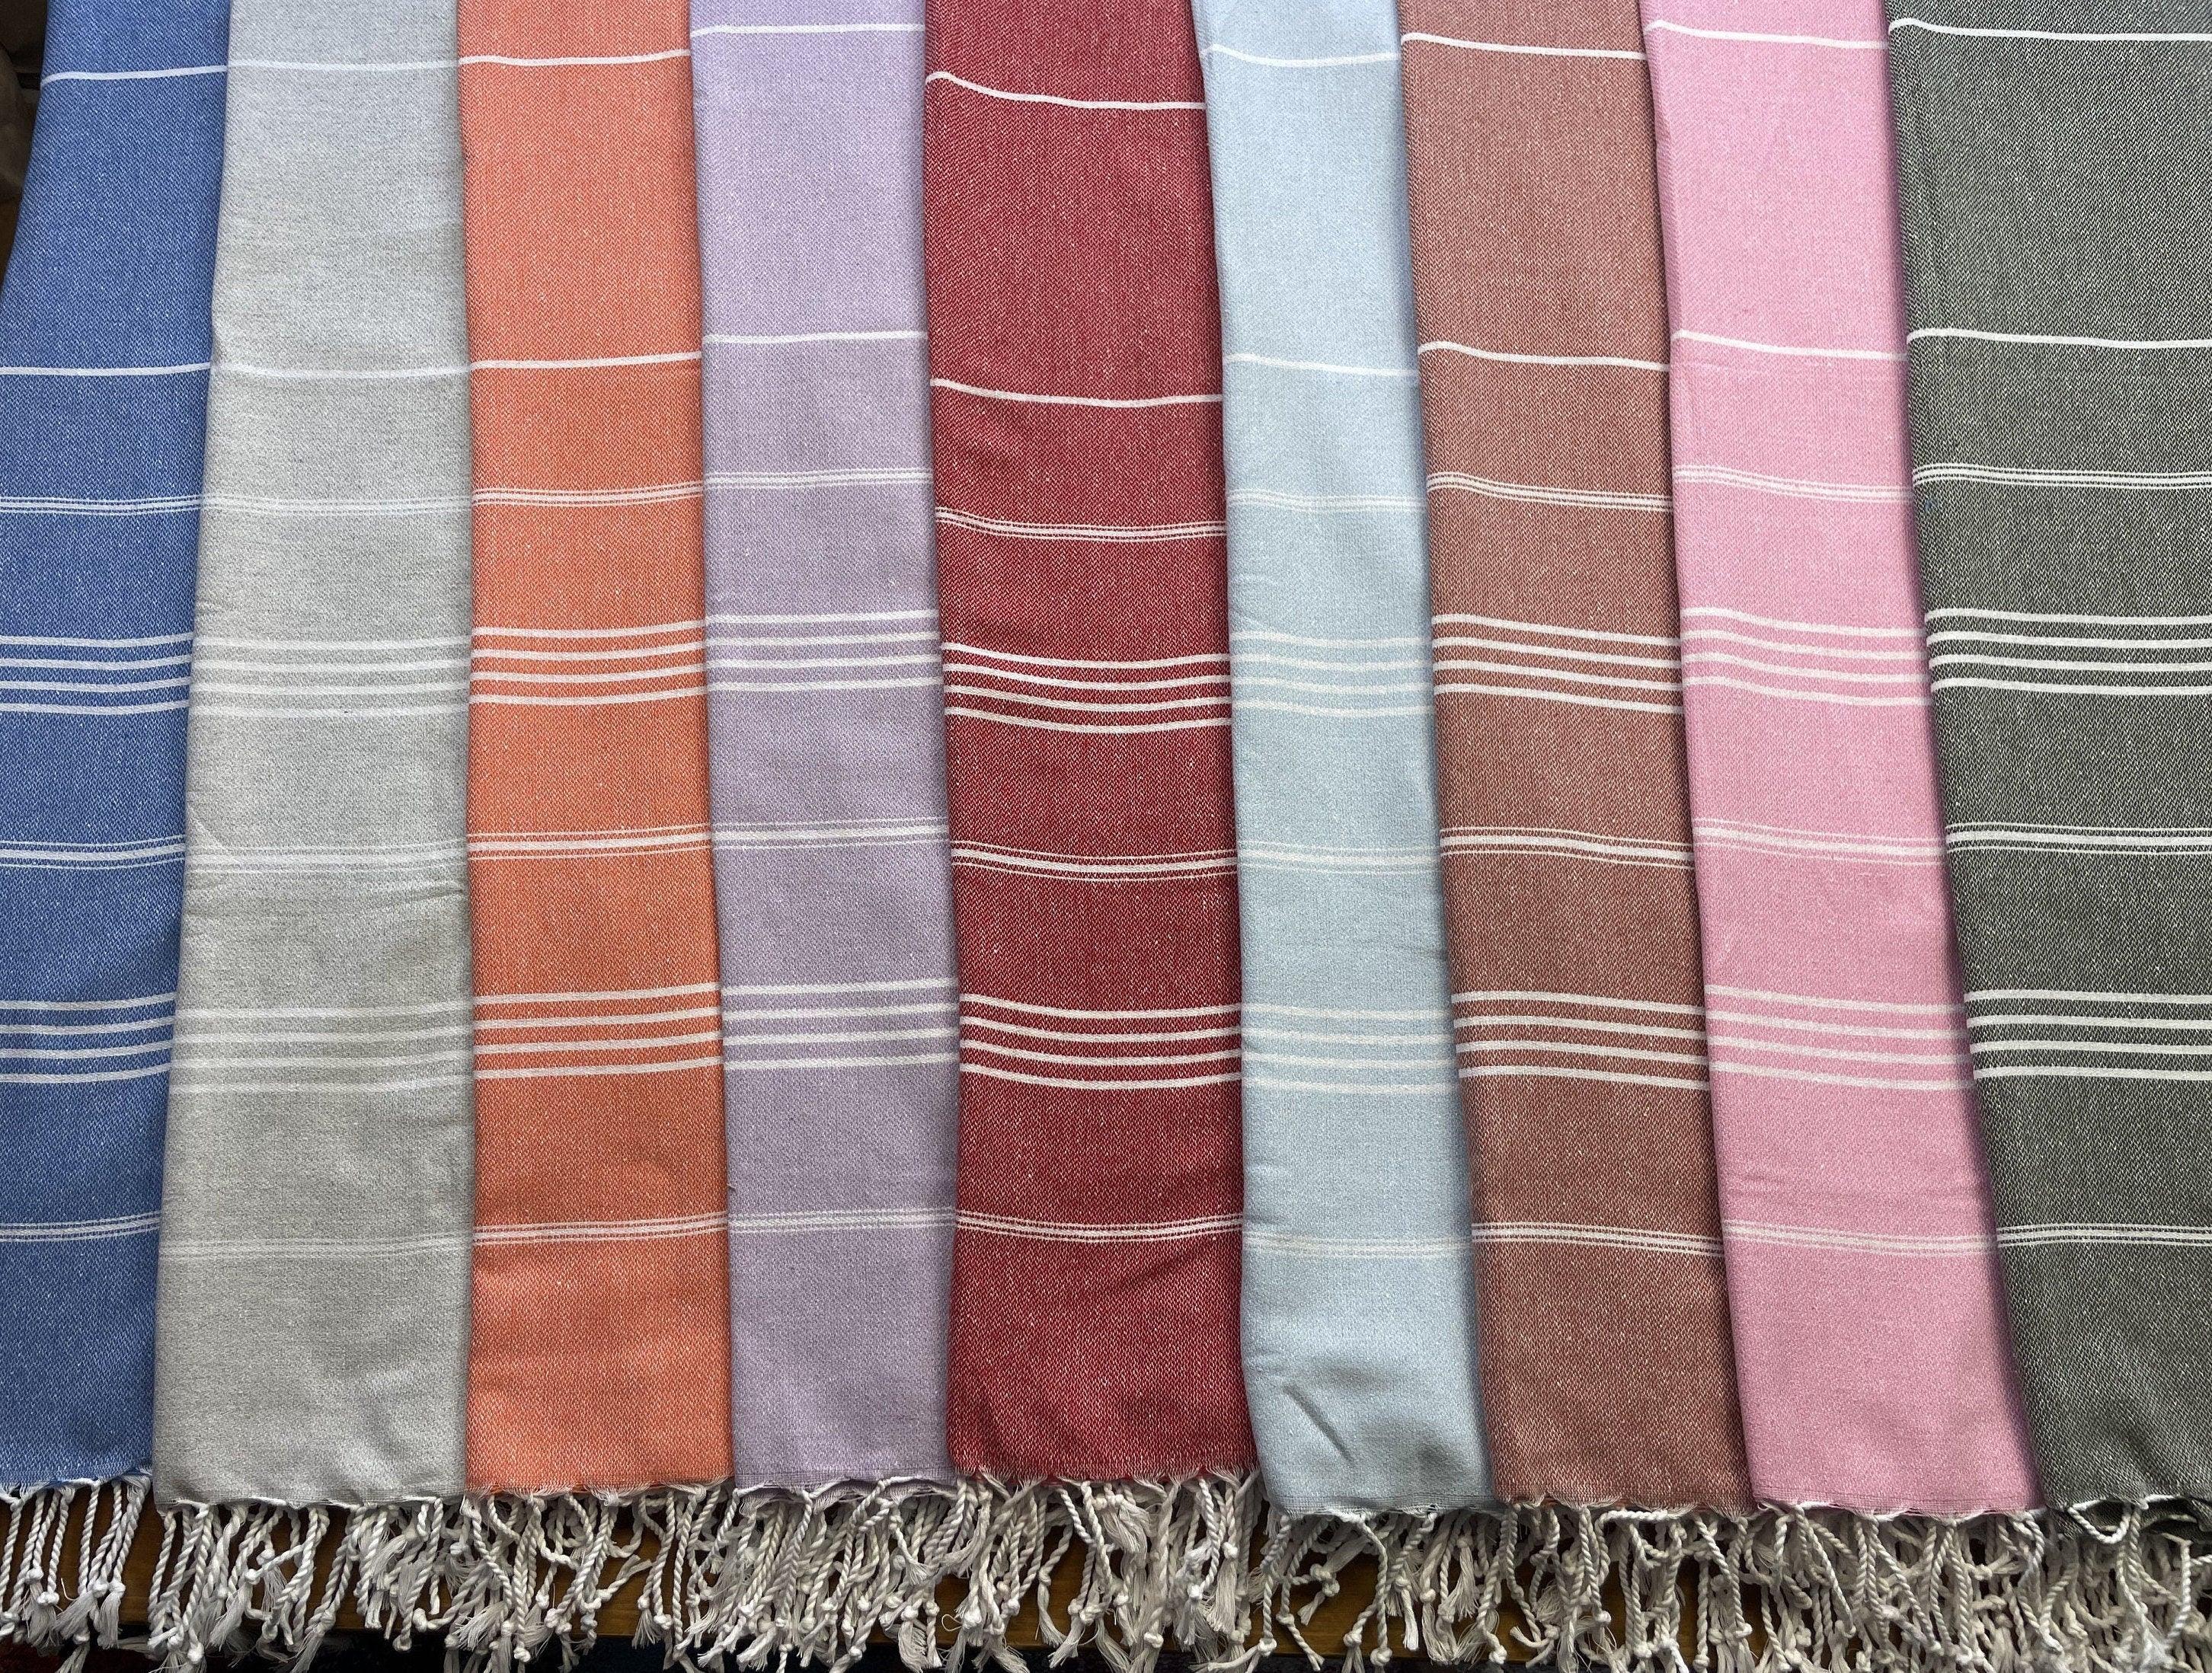 Exquisite Turkish Peshtemal Towel, Turkish Bath Towel, Cotton Bath Towel, 100% Cotton Towel, Turkish Towel Beach, Striped Peshtemal, Holiday Towels available at Moyoni Design